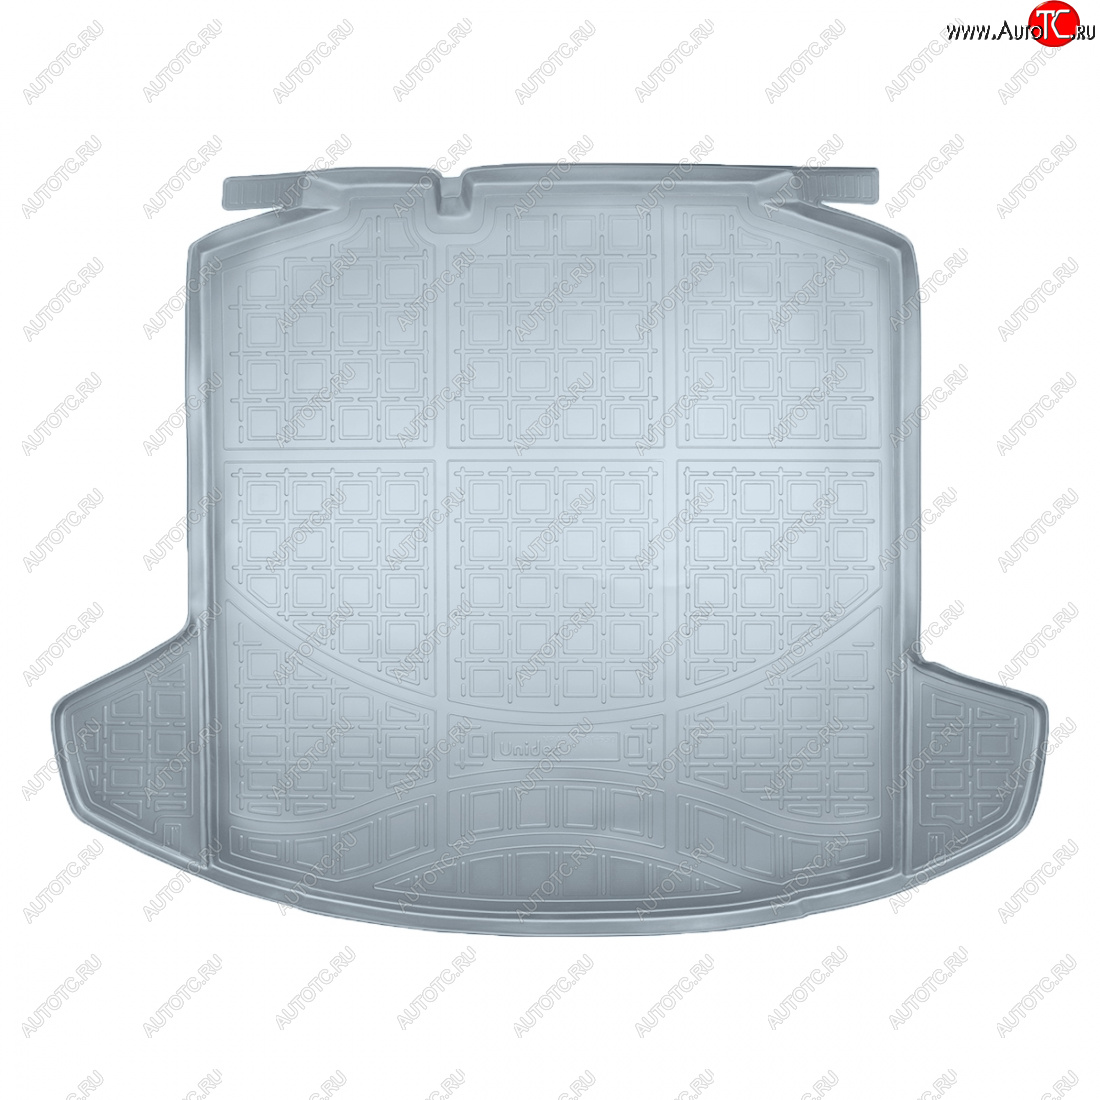 1 979 р. Коврик багажника Norplast Unidec  Volkswagen Polo  Mk6 (2020-2022) (серый)